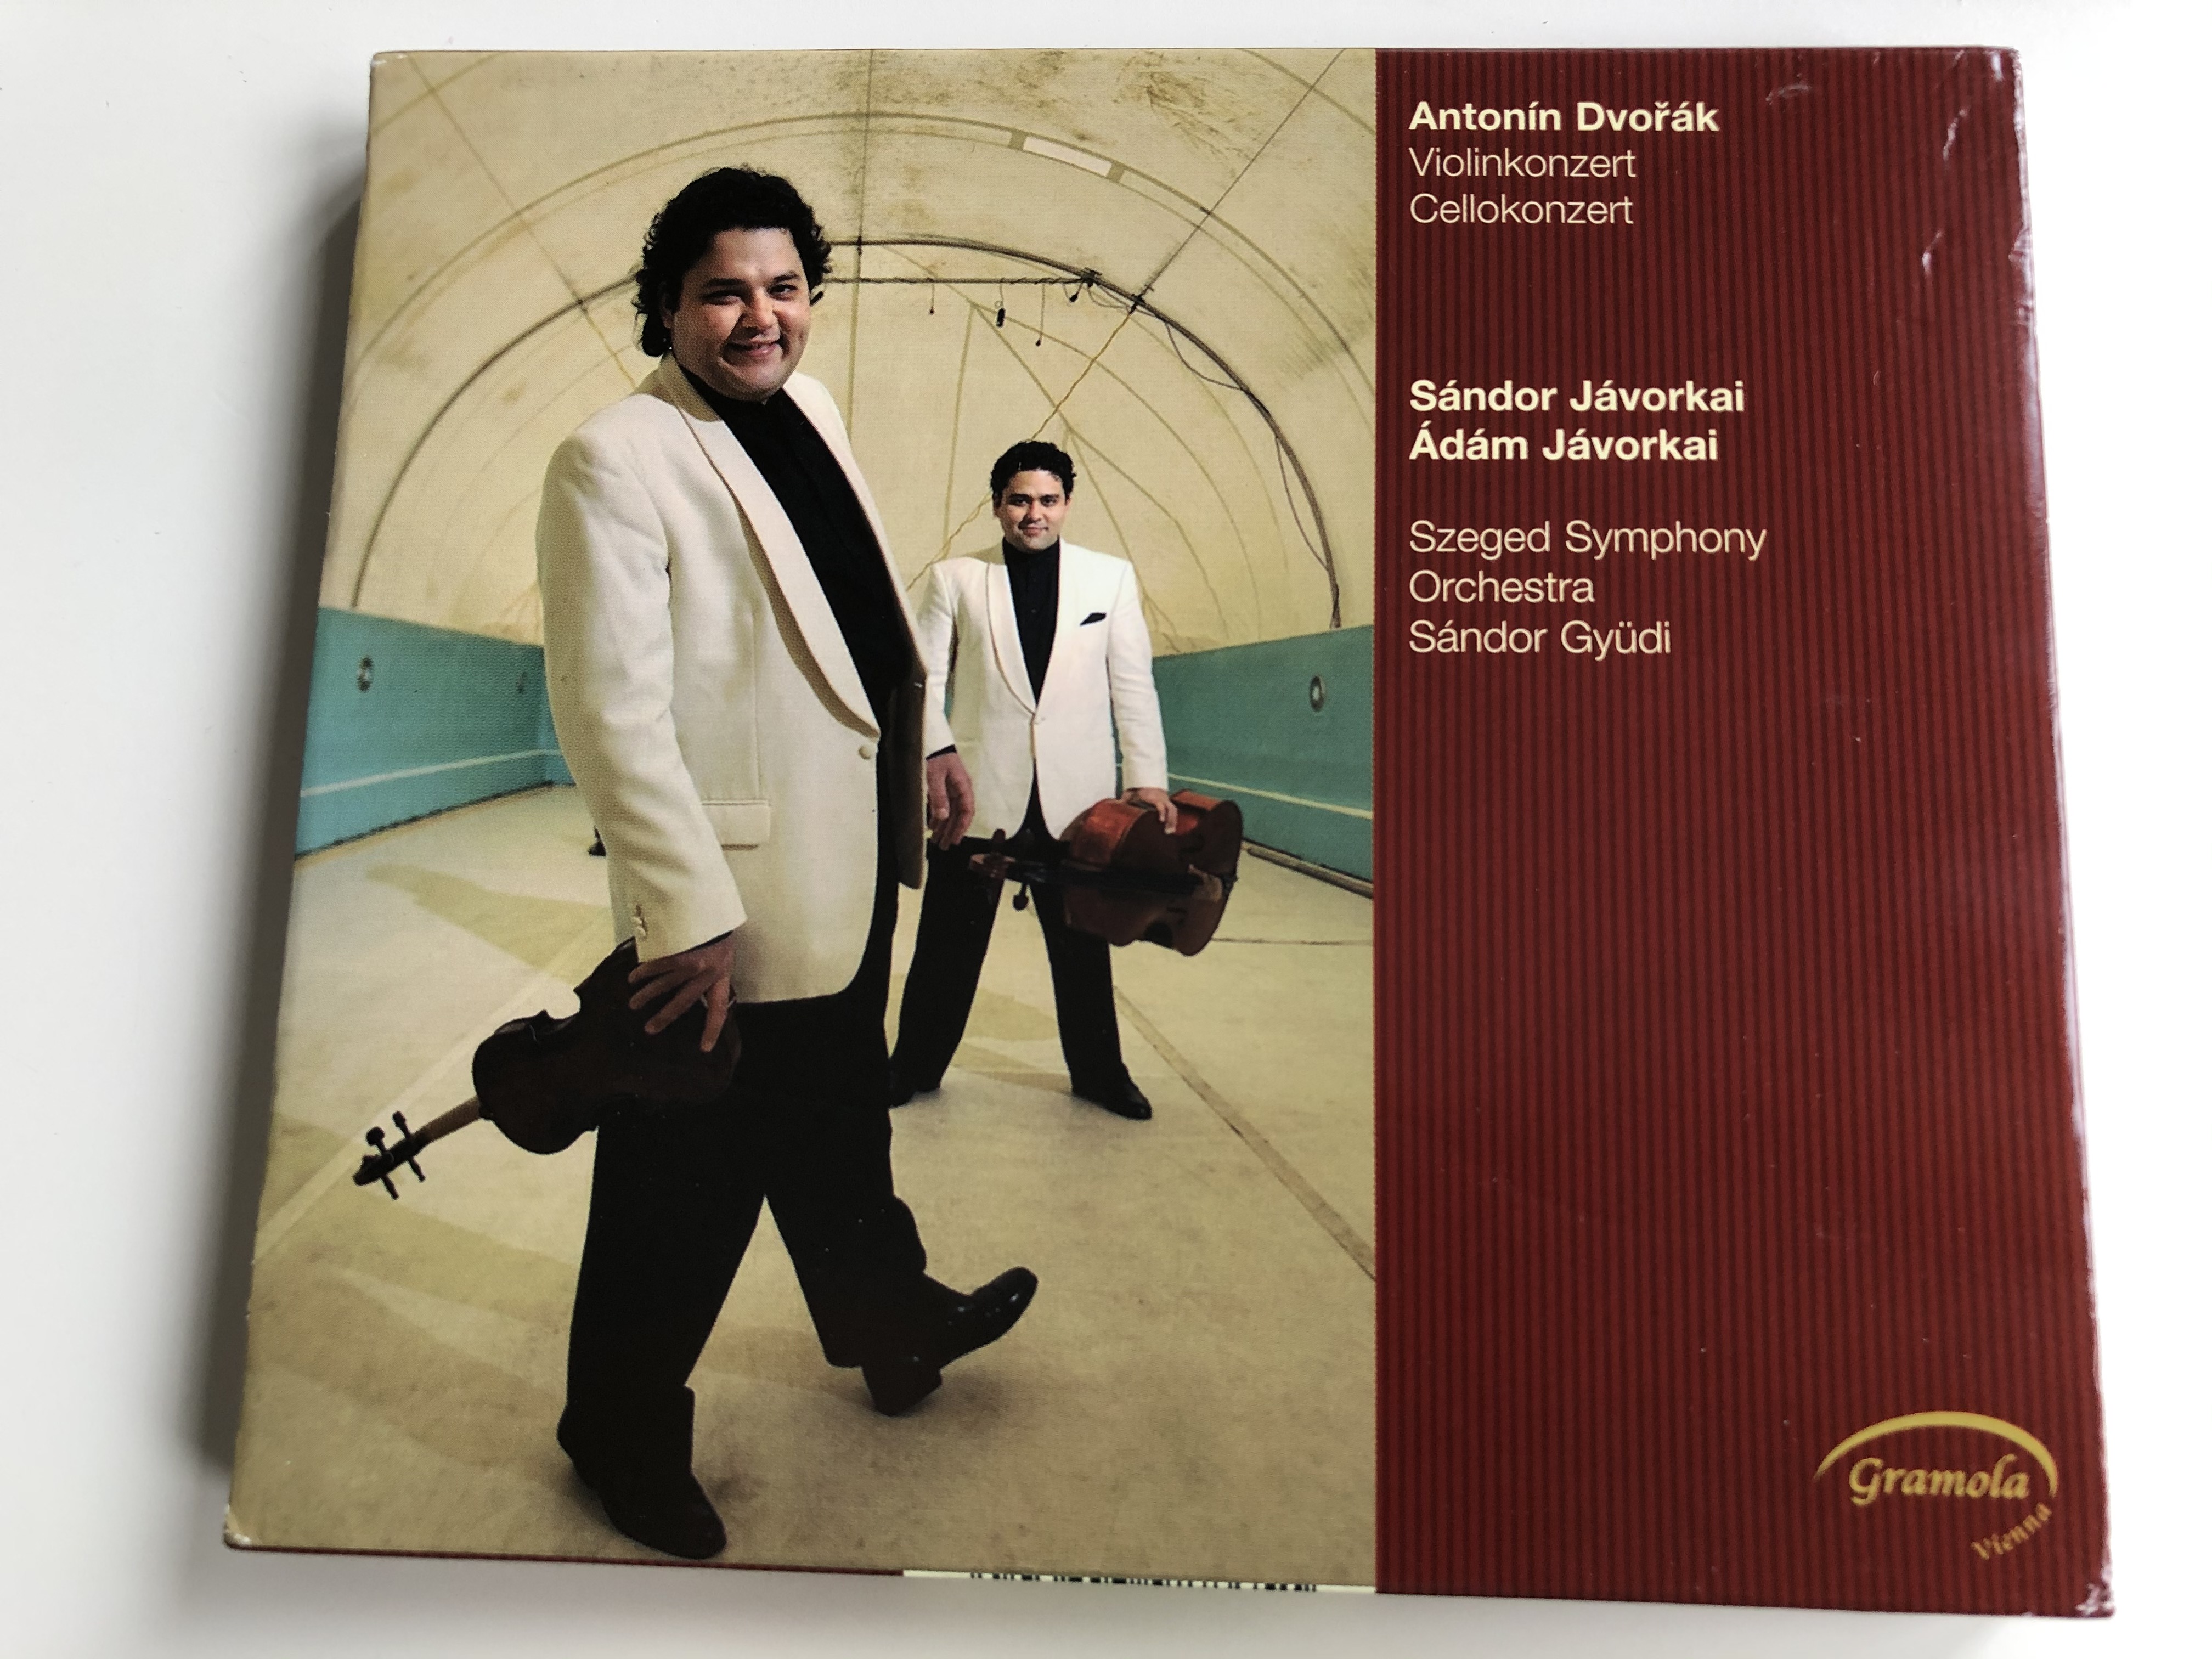 antonin-dvorak-violinkonzert-cellokonzert-sandor-javorkai-adam-javorkai-szeged-symphony-orchestra-sandor-gyudi-gramola-audio-cd-2009-98865-1-.jpg